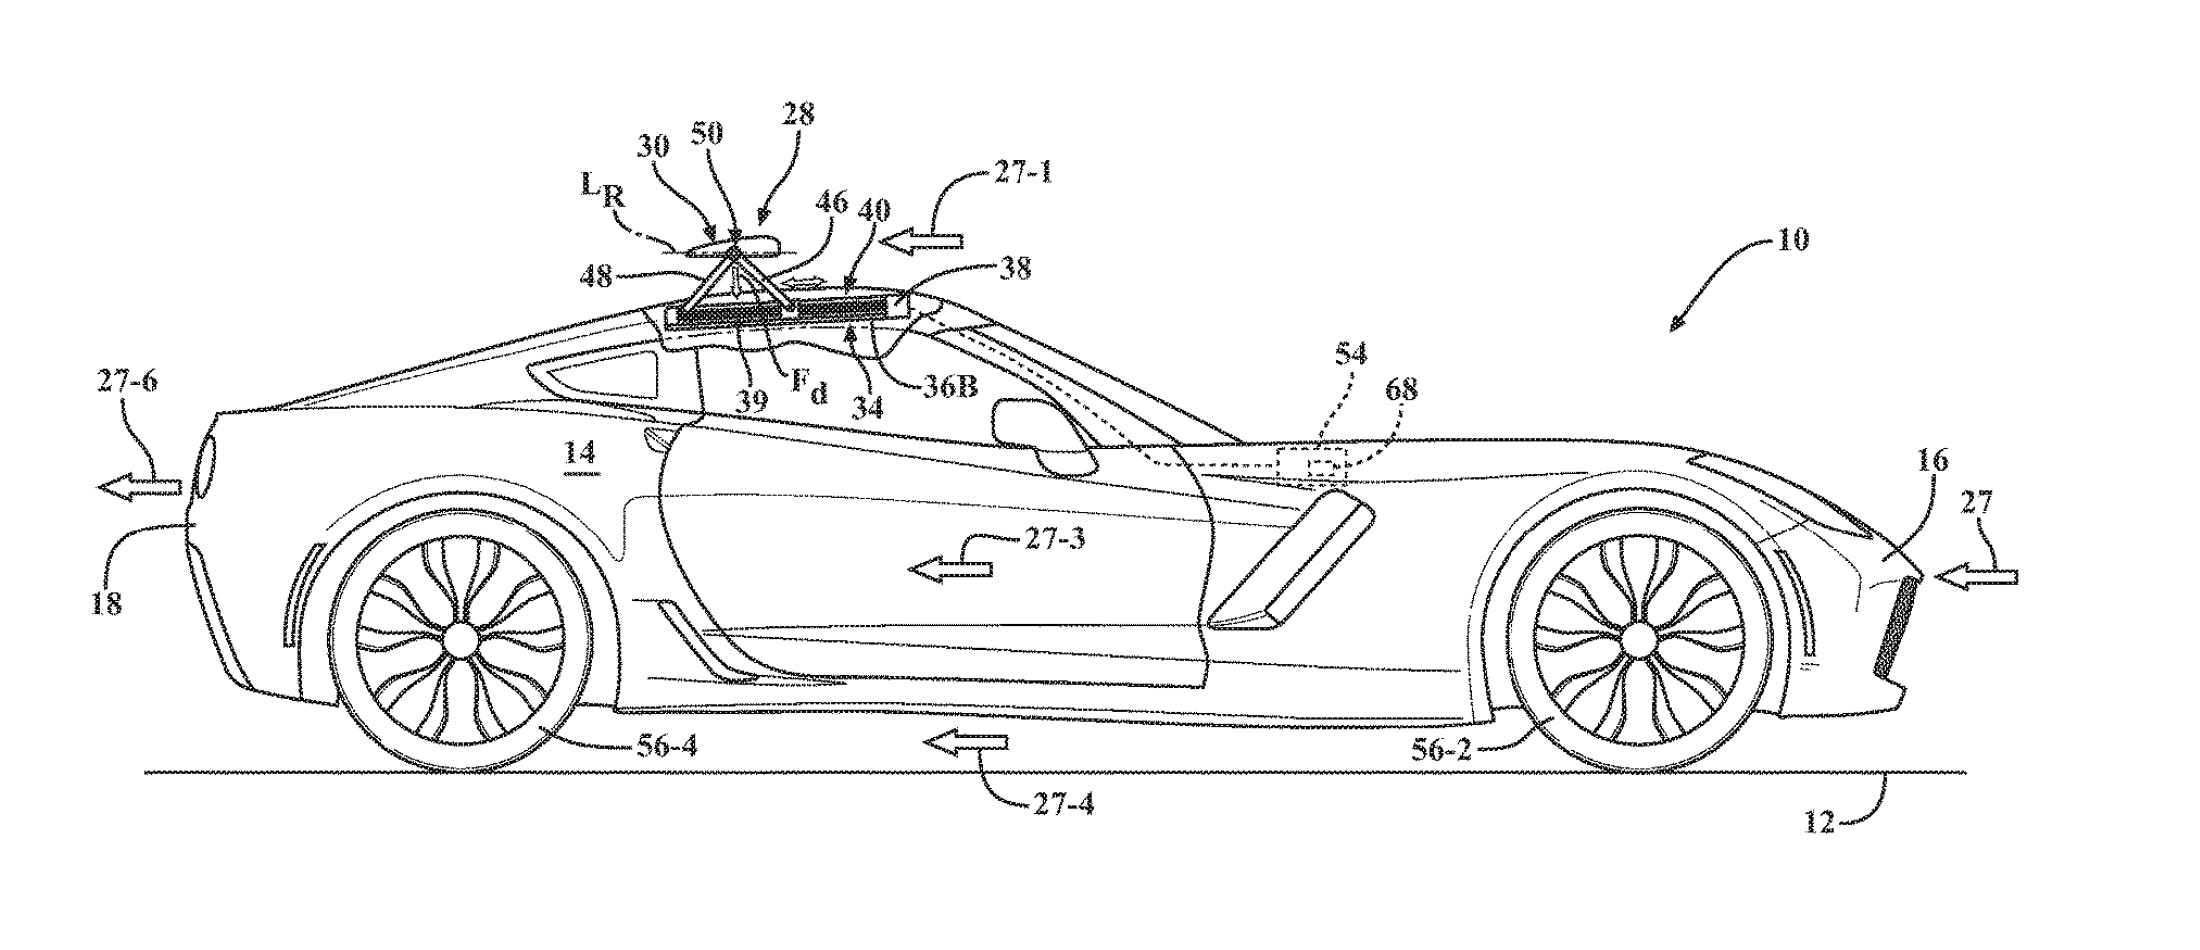 Corvette active aero patent